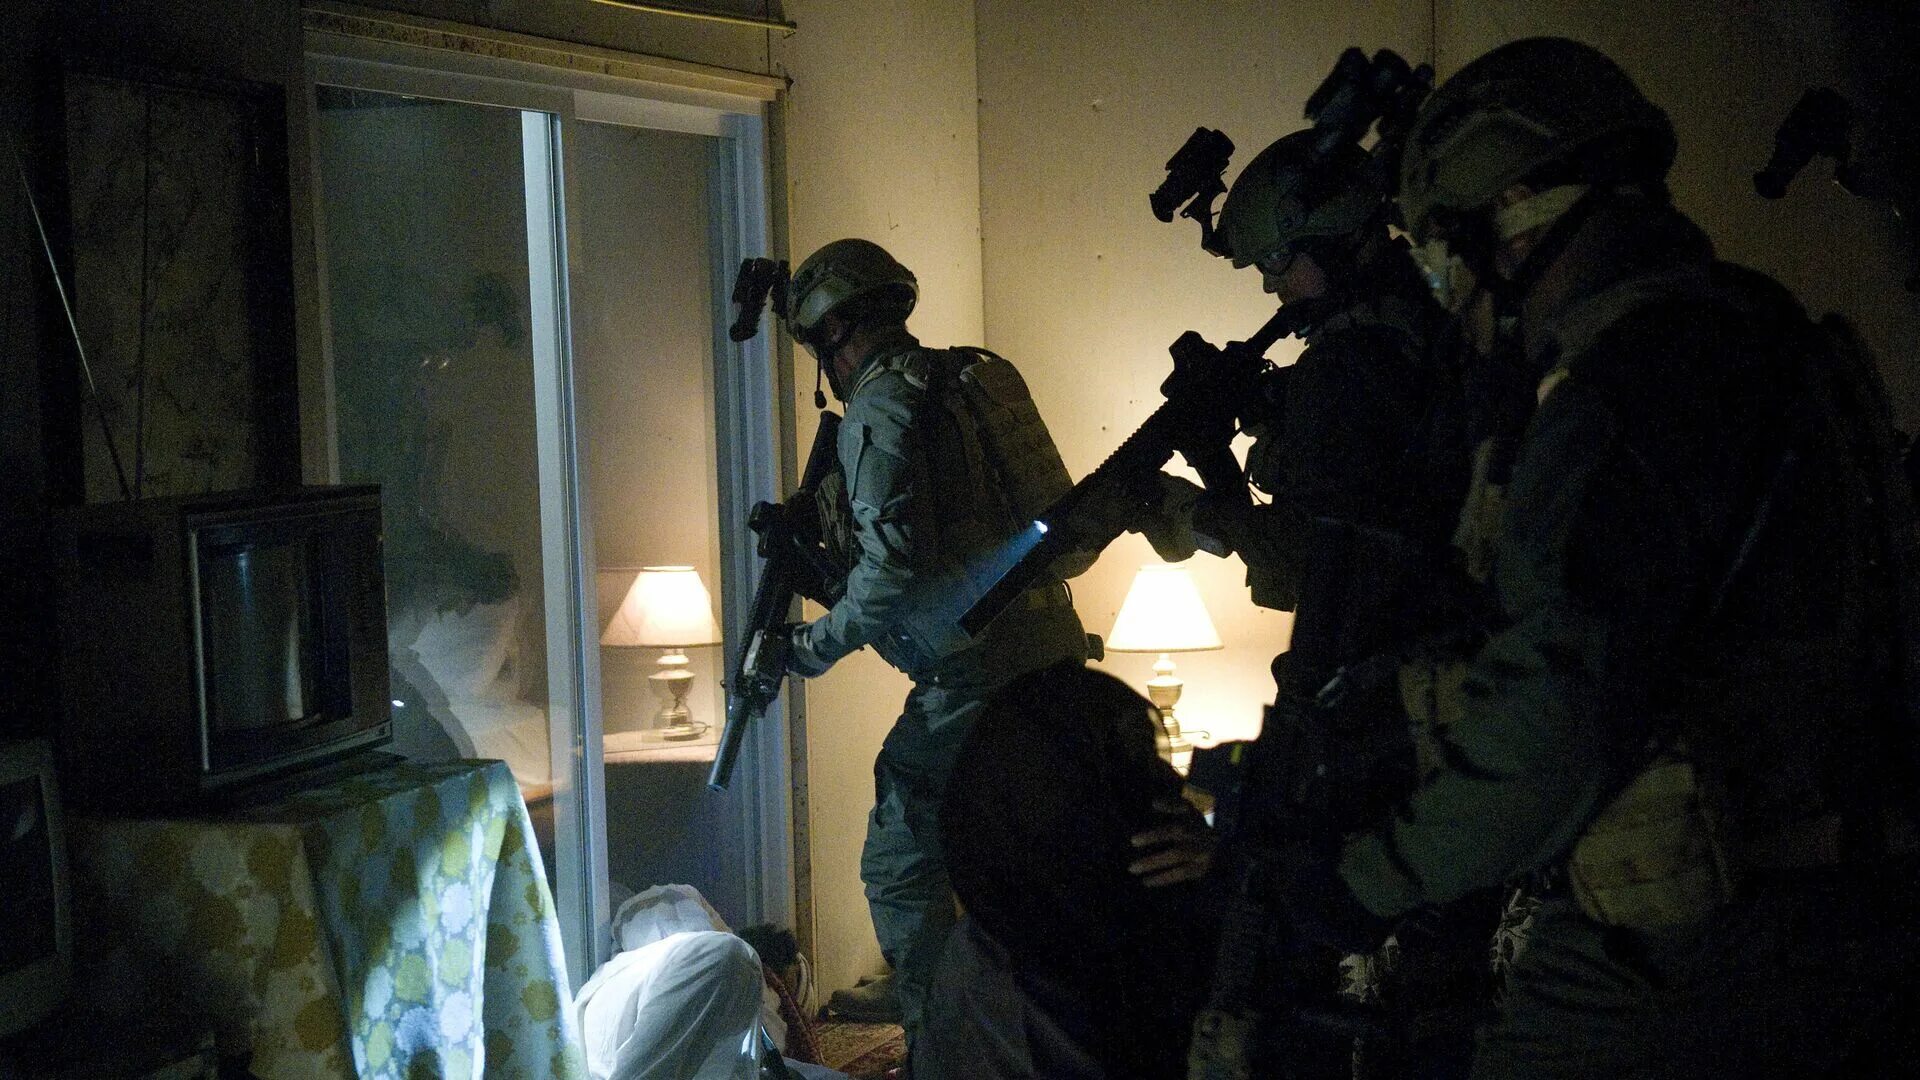 Seal Team 6 the Raid on Osama bin Laden. Seal Team 6 копье Нептуна. Операция «копьё Нептуна». Операция «копьё Нептуна» итоги. 5 мая 2011